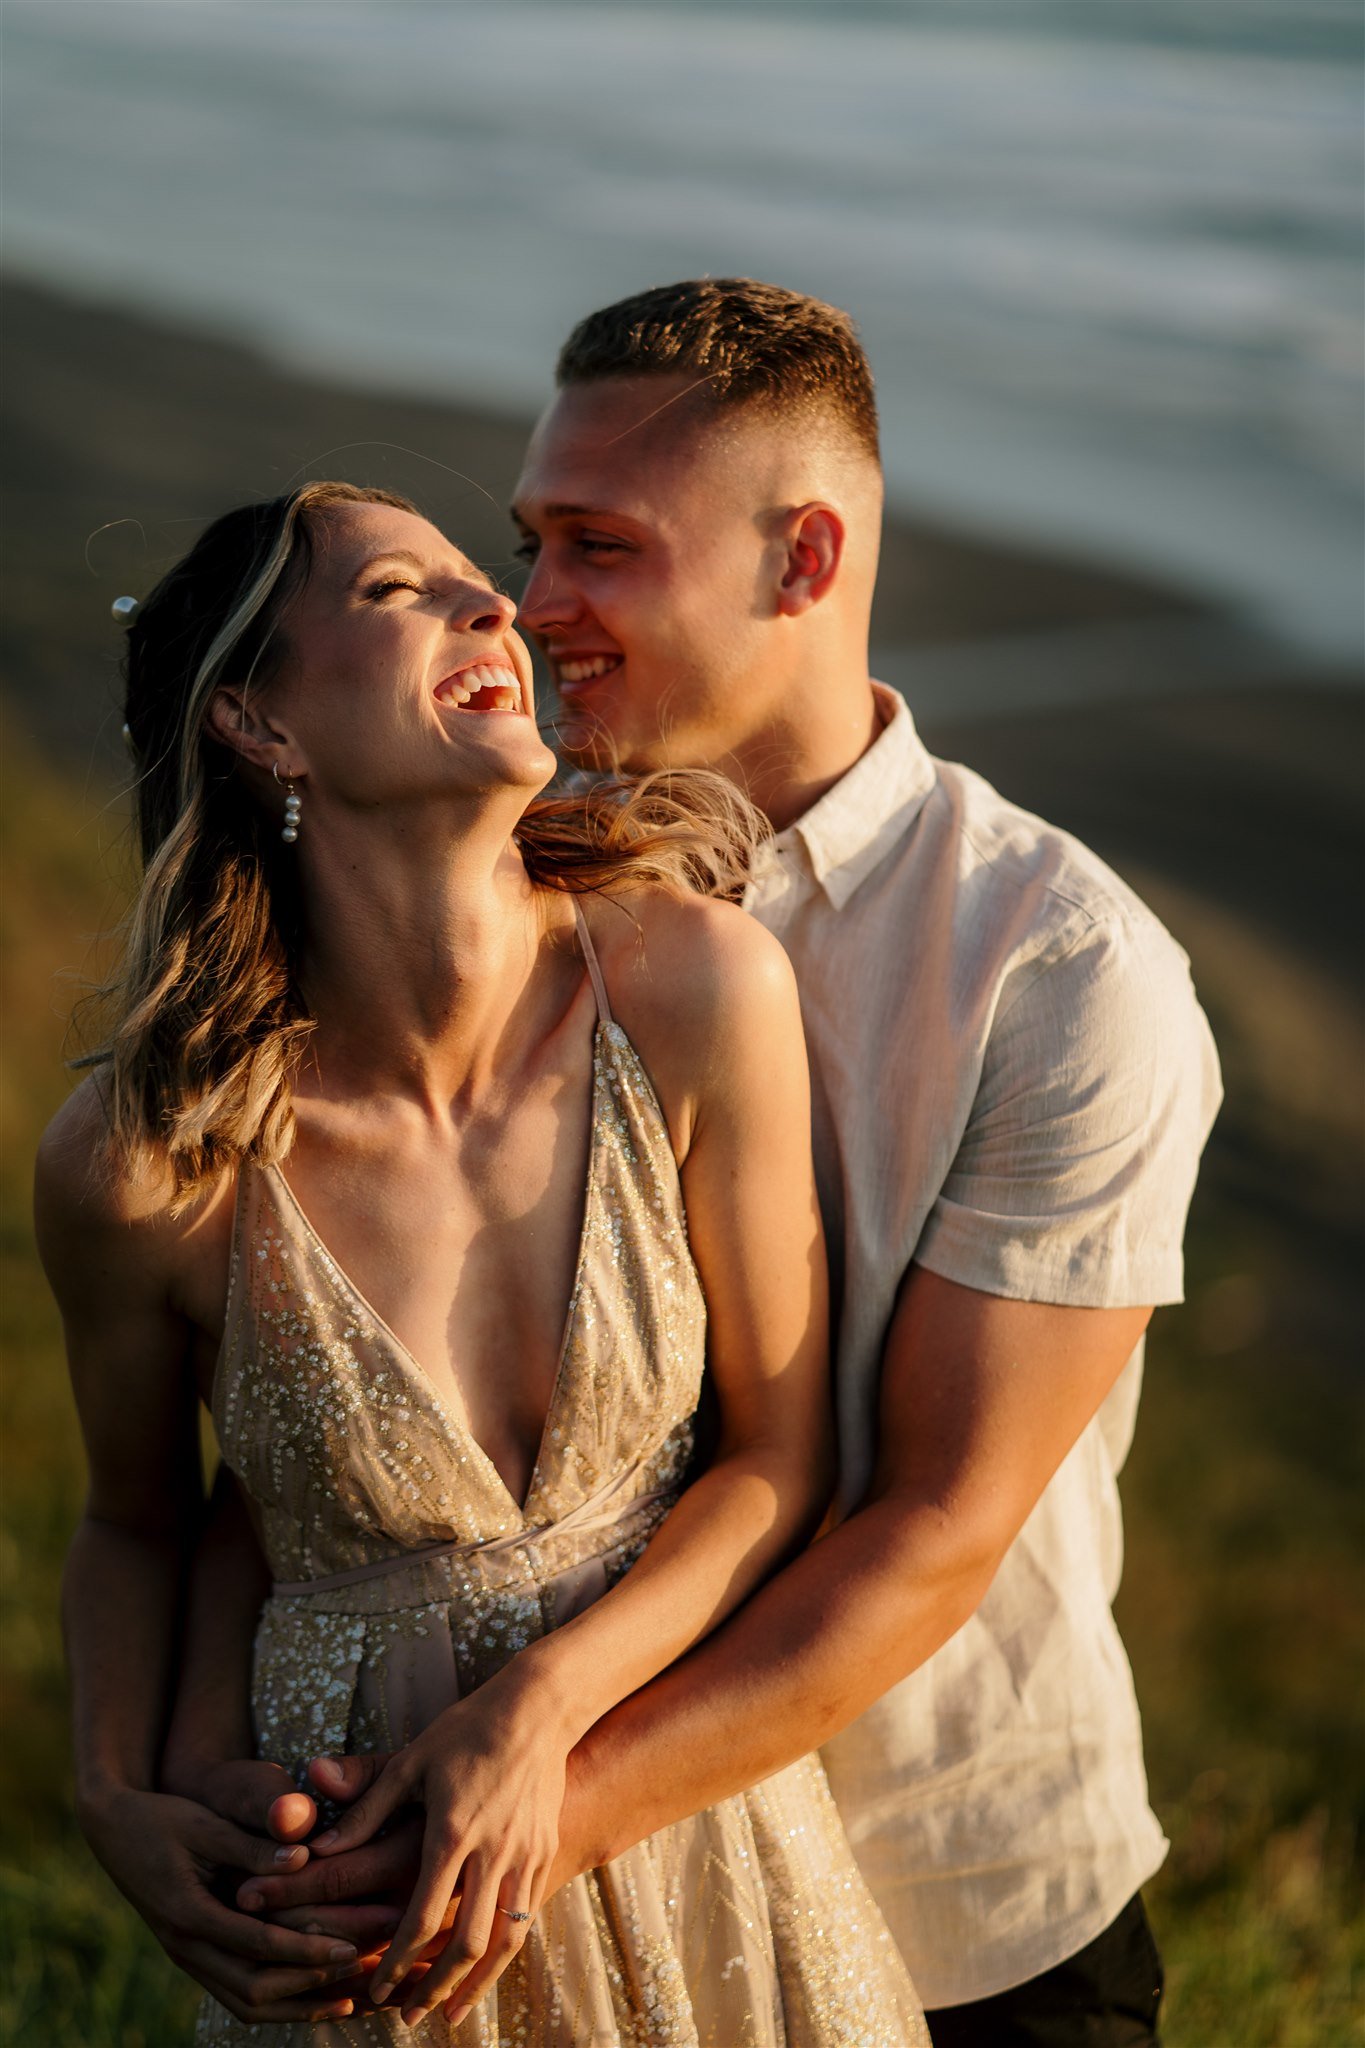 hair-and-makeup-by-ari-day-castaways-NZ-new-zealand-auckland-wedding-photographer-photography-videography-film-dear-white-productions-best-venue-waiuku-engagement-elopement-beach-intimate  (7).jpg